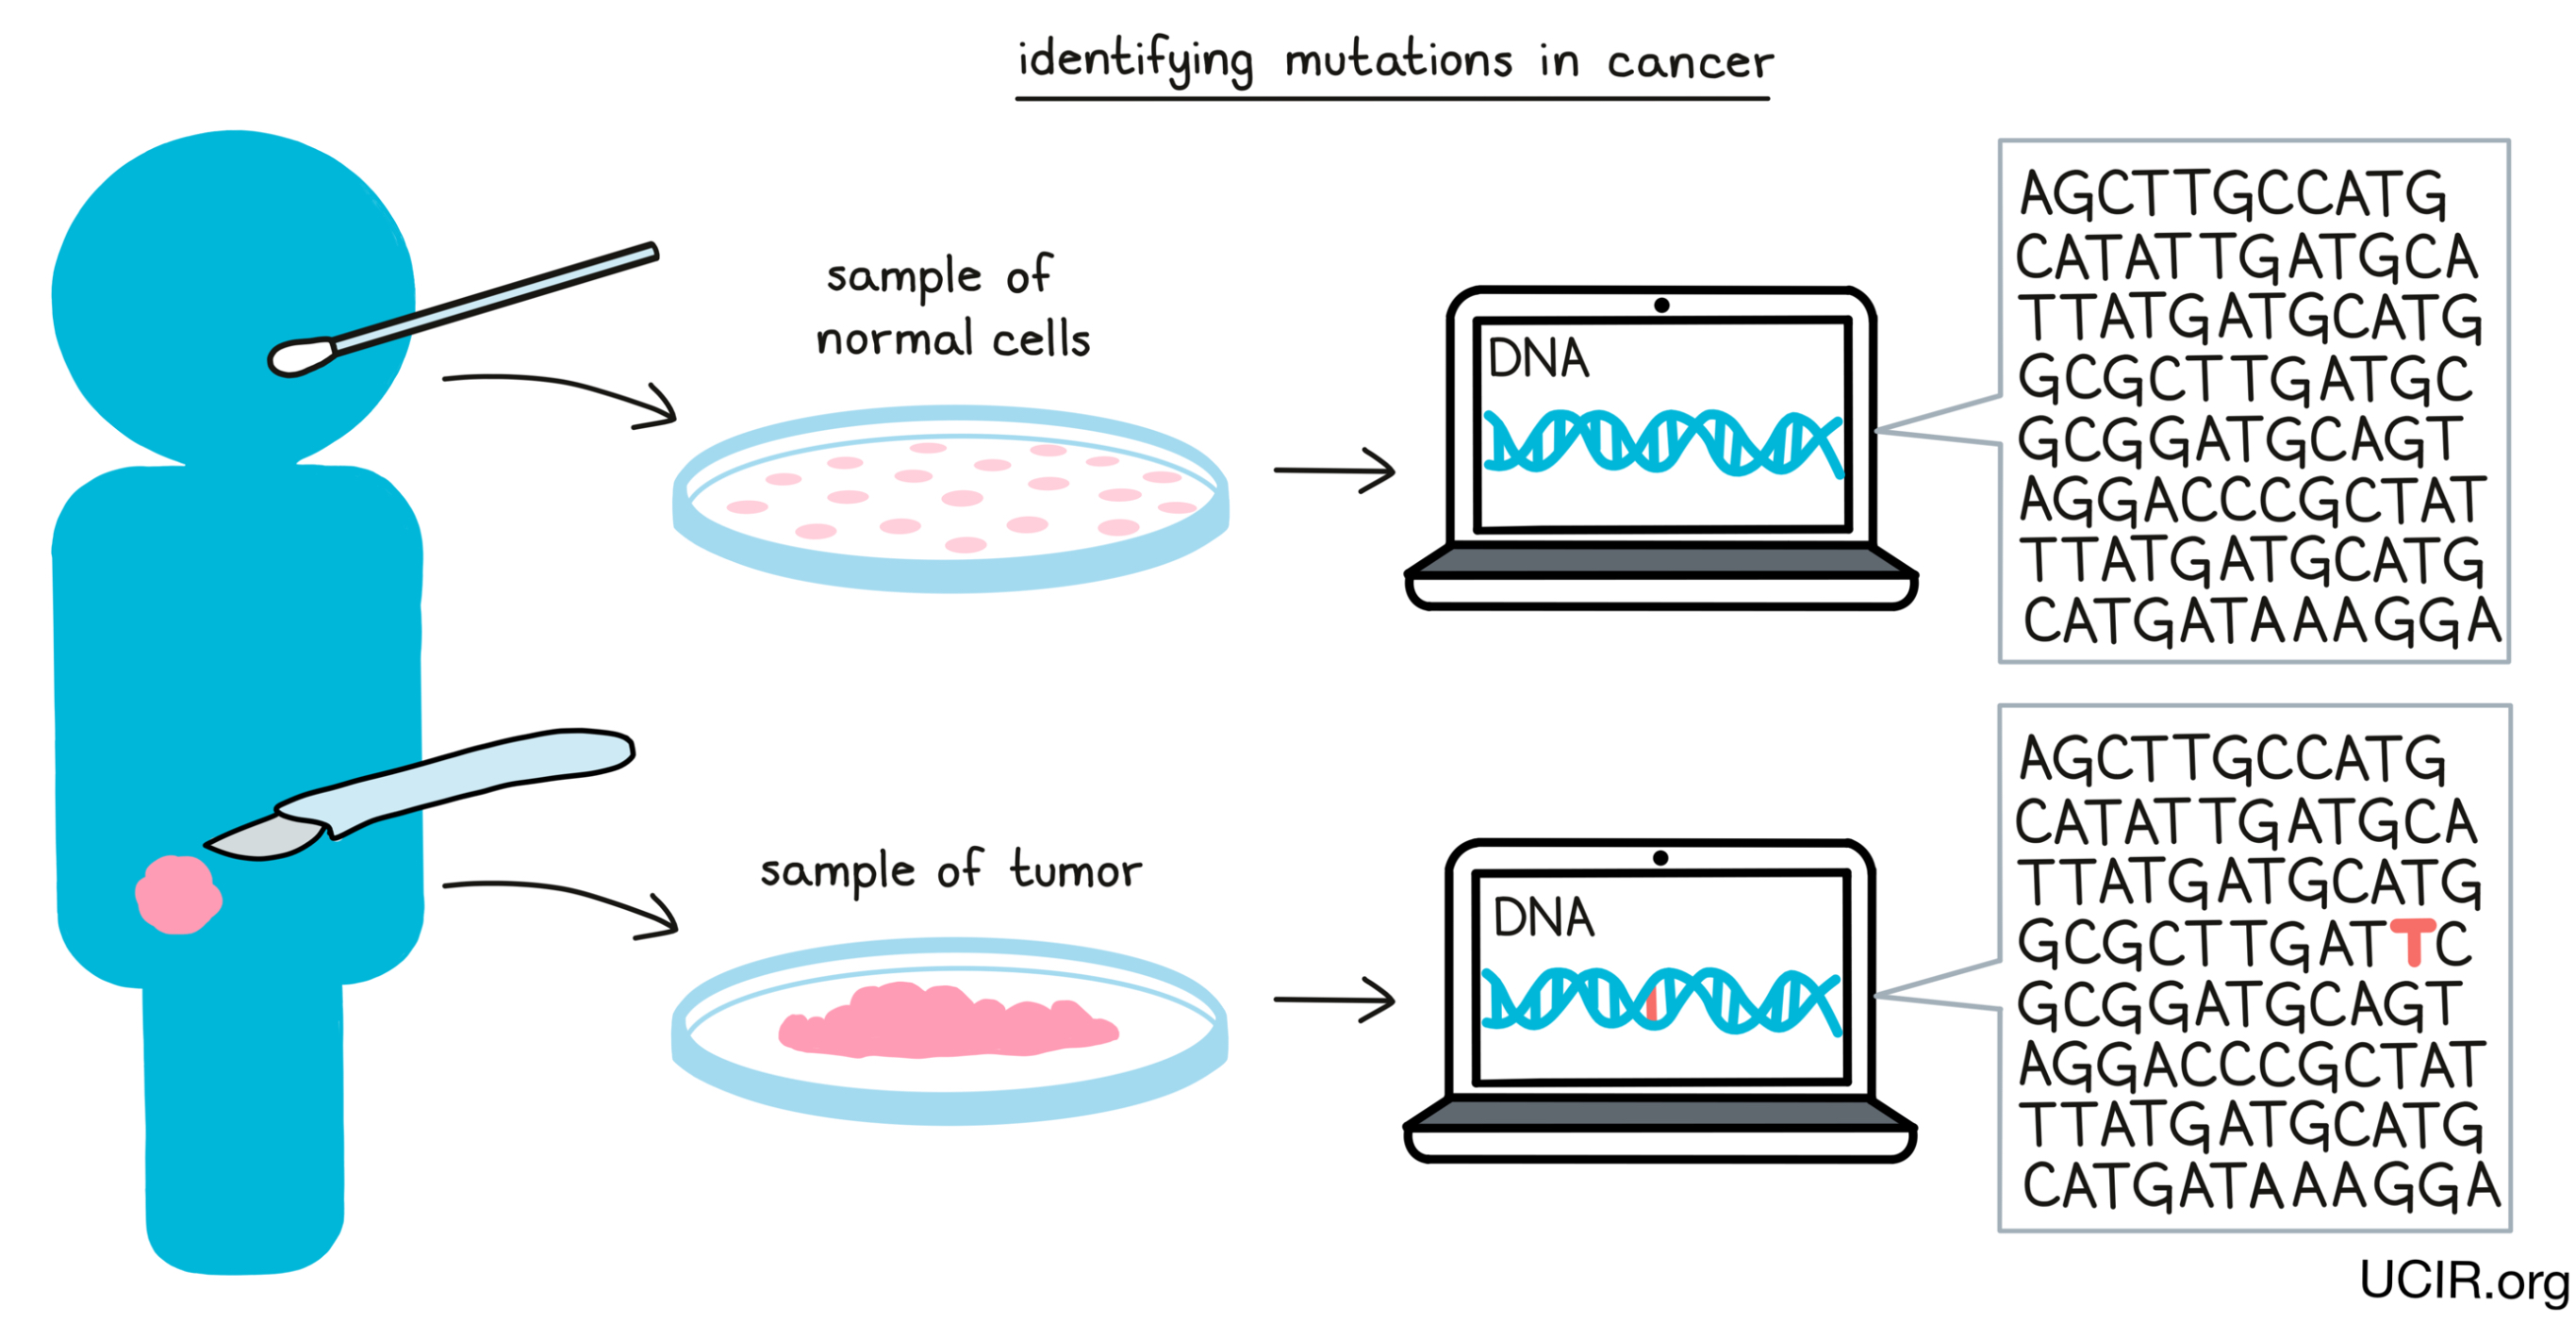 Identifying mutations in cancer